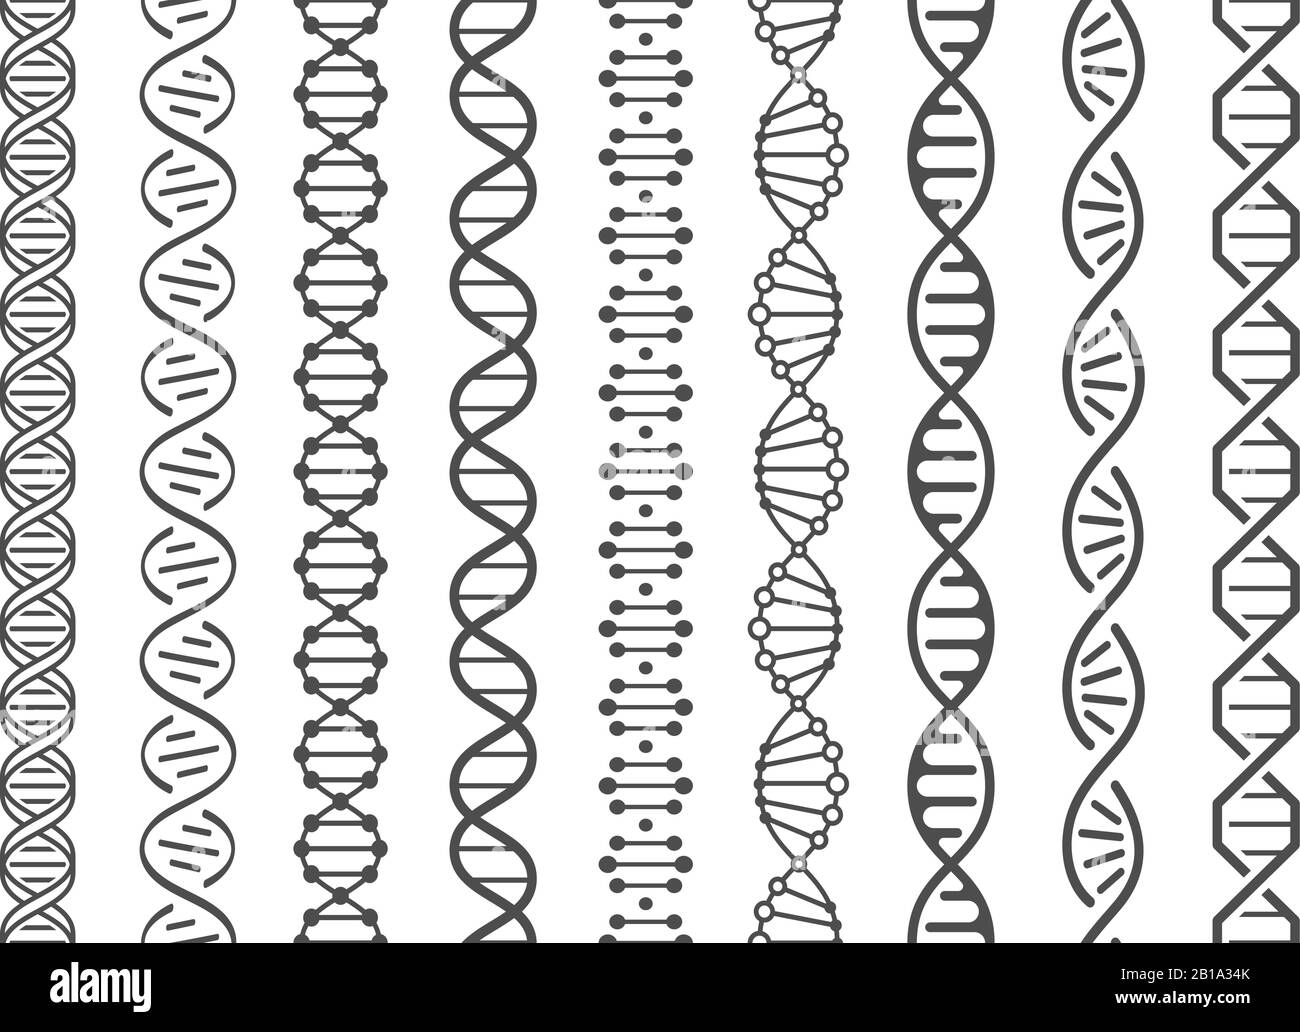 Nahtlose DNA-Spirale. ADN Helix-Struktur, Genomikmodell und Humangenetik Codemuster Vektorgrafiksatz Stock Vektor